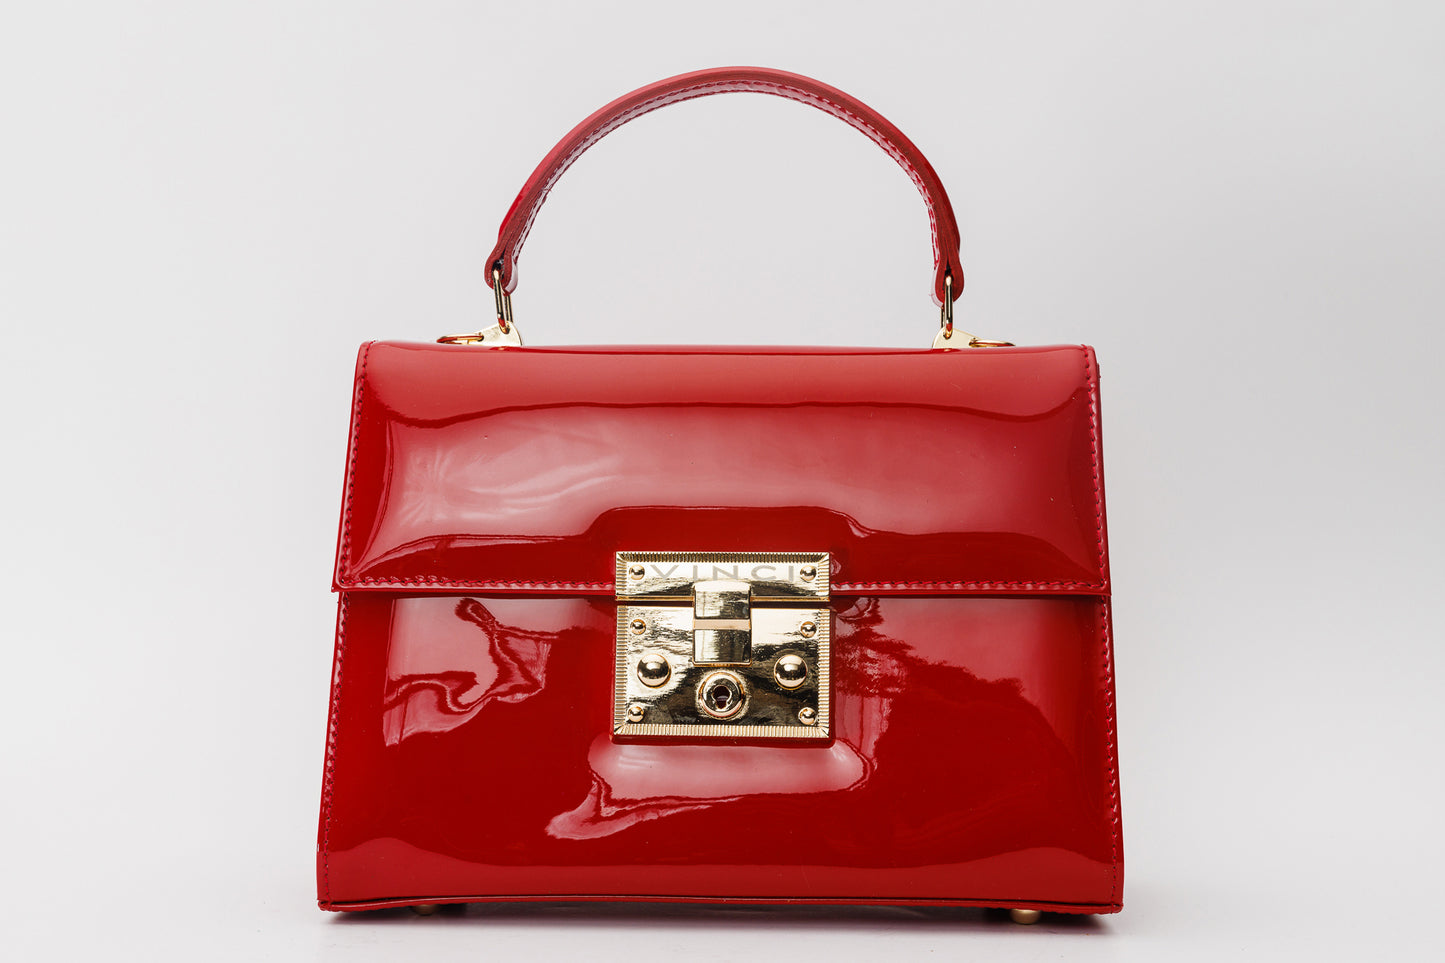 The Ege Red Patent Leather Handbag